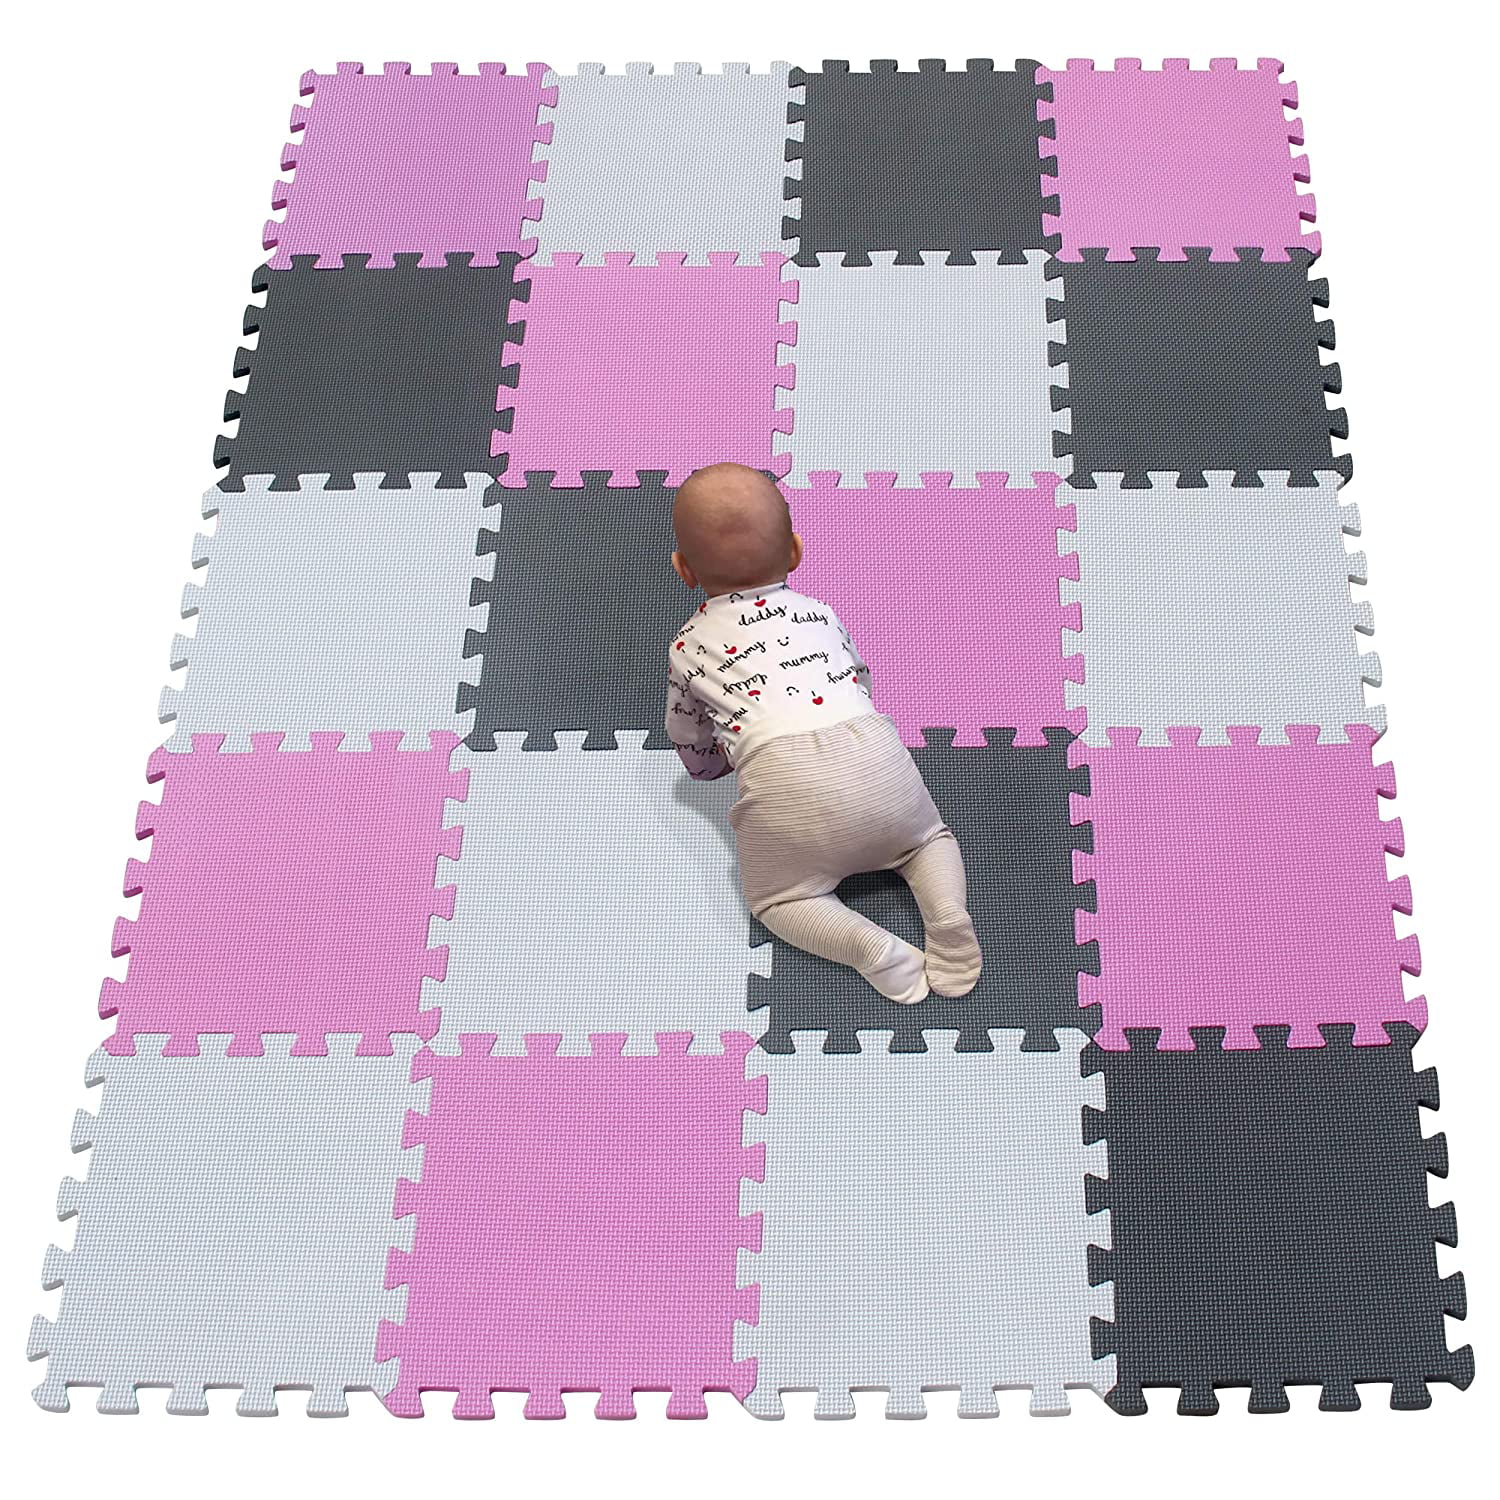 20X Large Soft Foam EVA Interlocking Floor Tiles Play Mat Kids Gym Yoga Exercise 